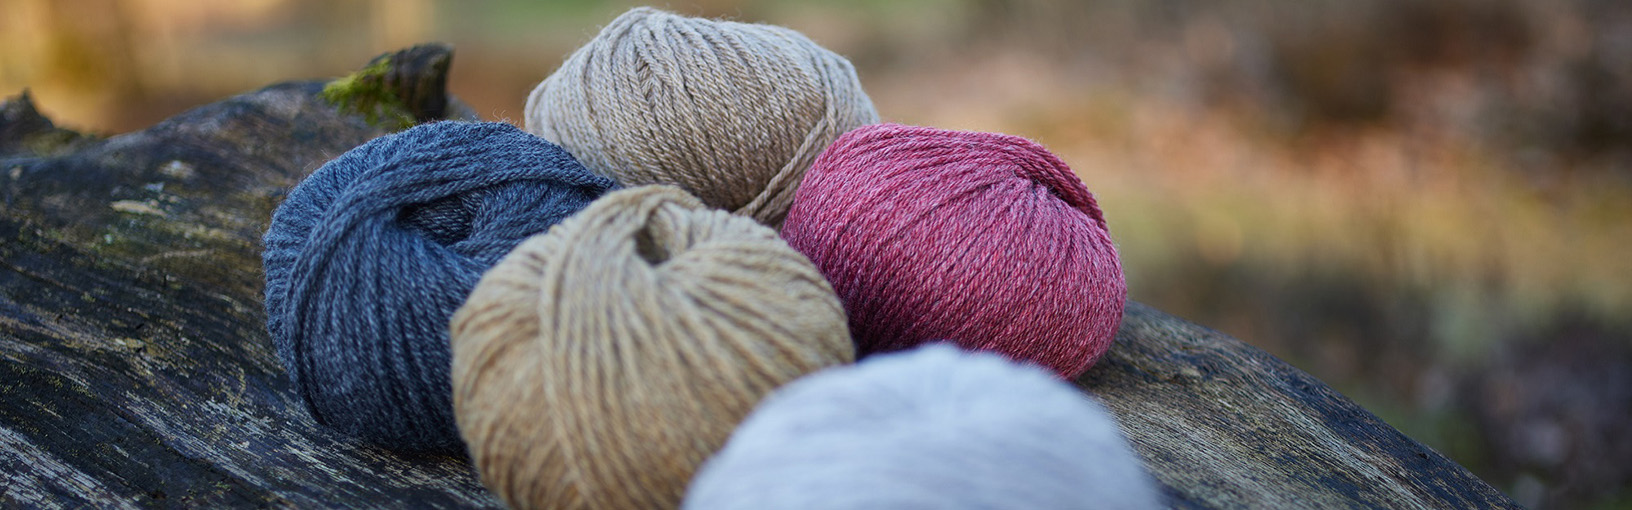 High quality yarns for knitting, crocheting & felting Lana Grossa Yarns | Linea Pura - Organic yarn